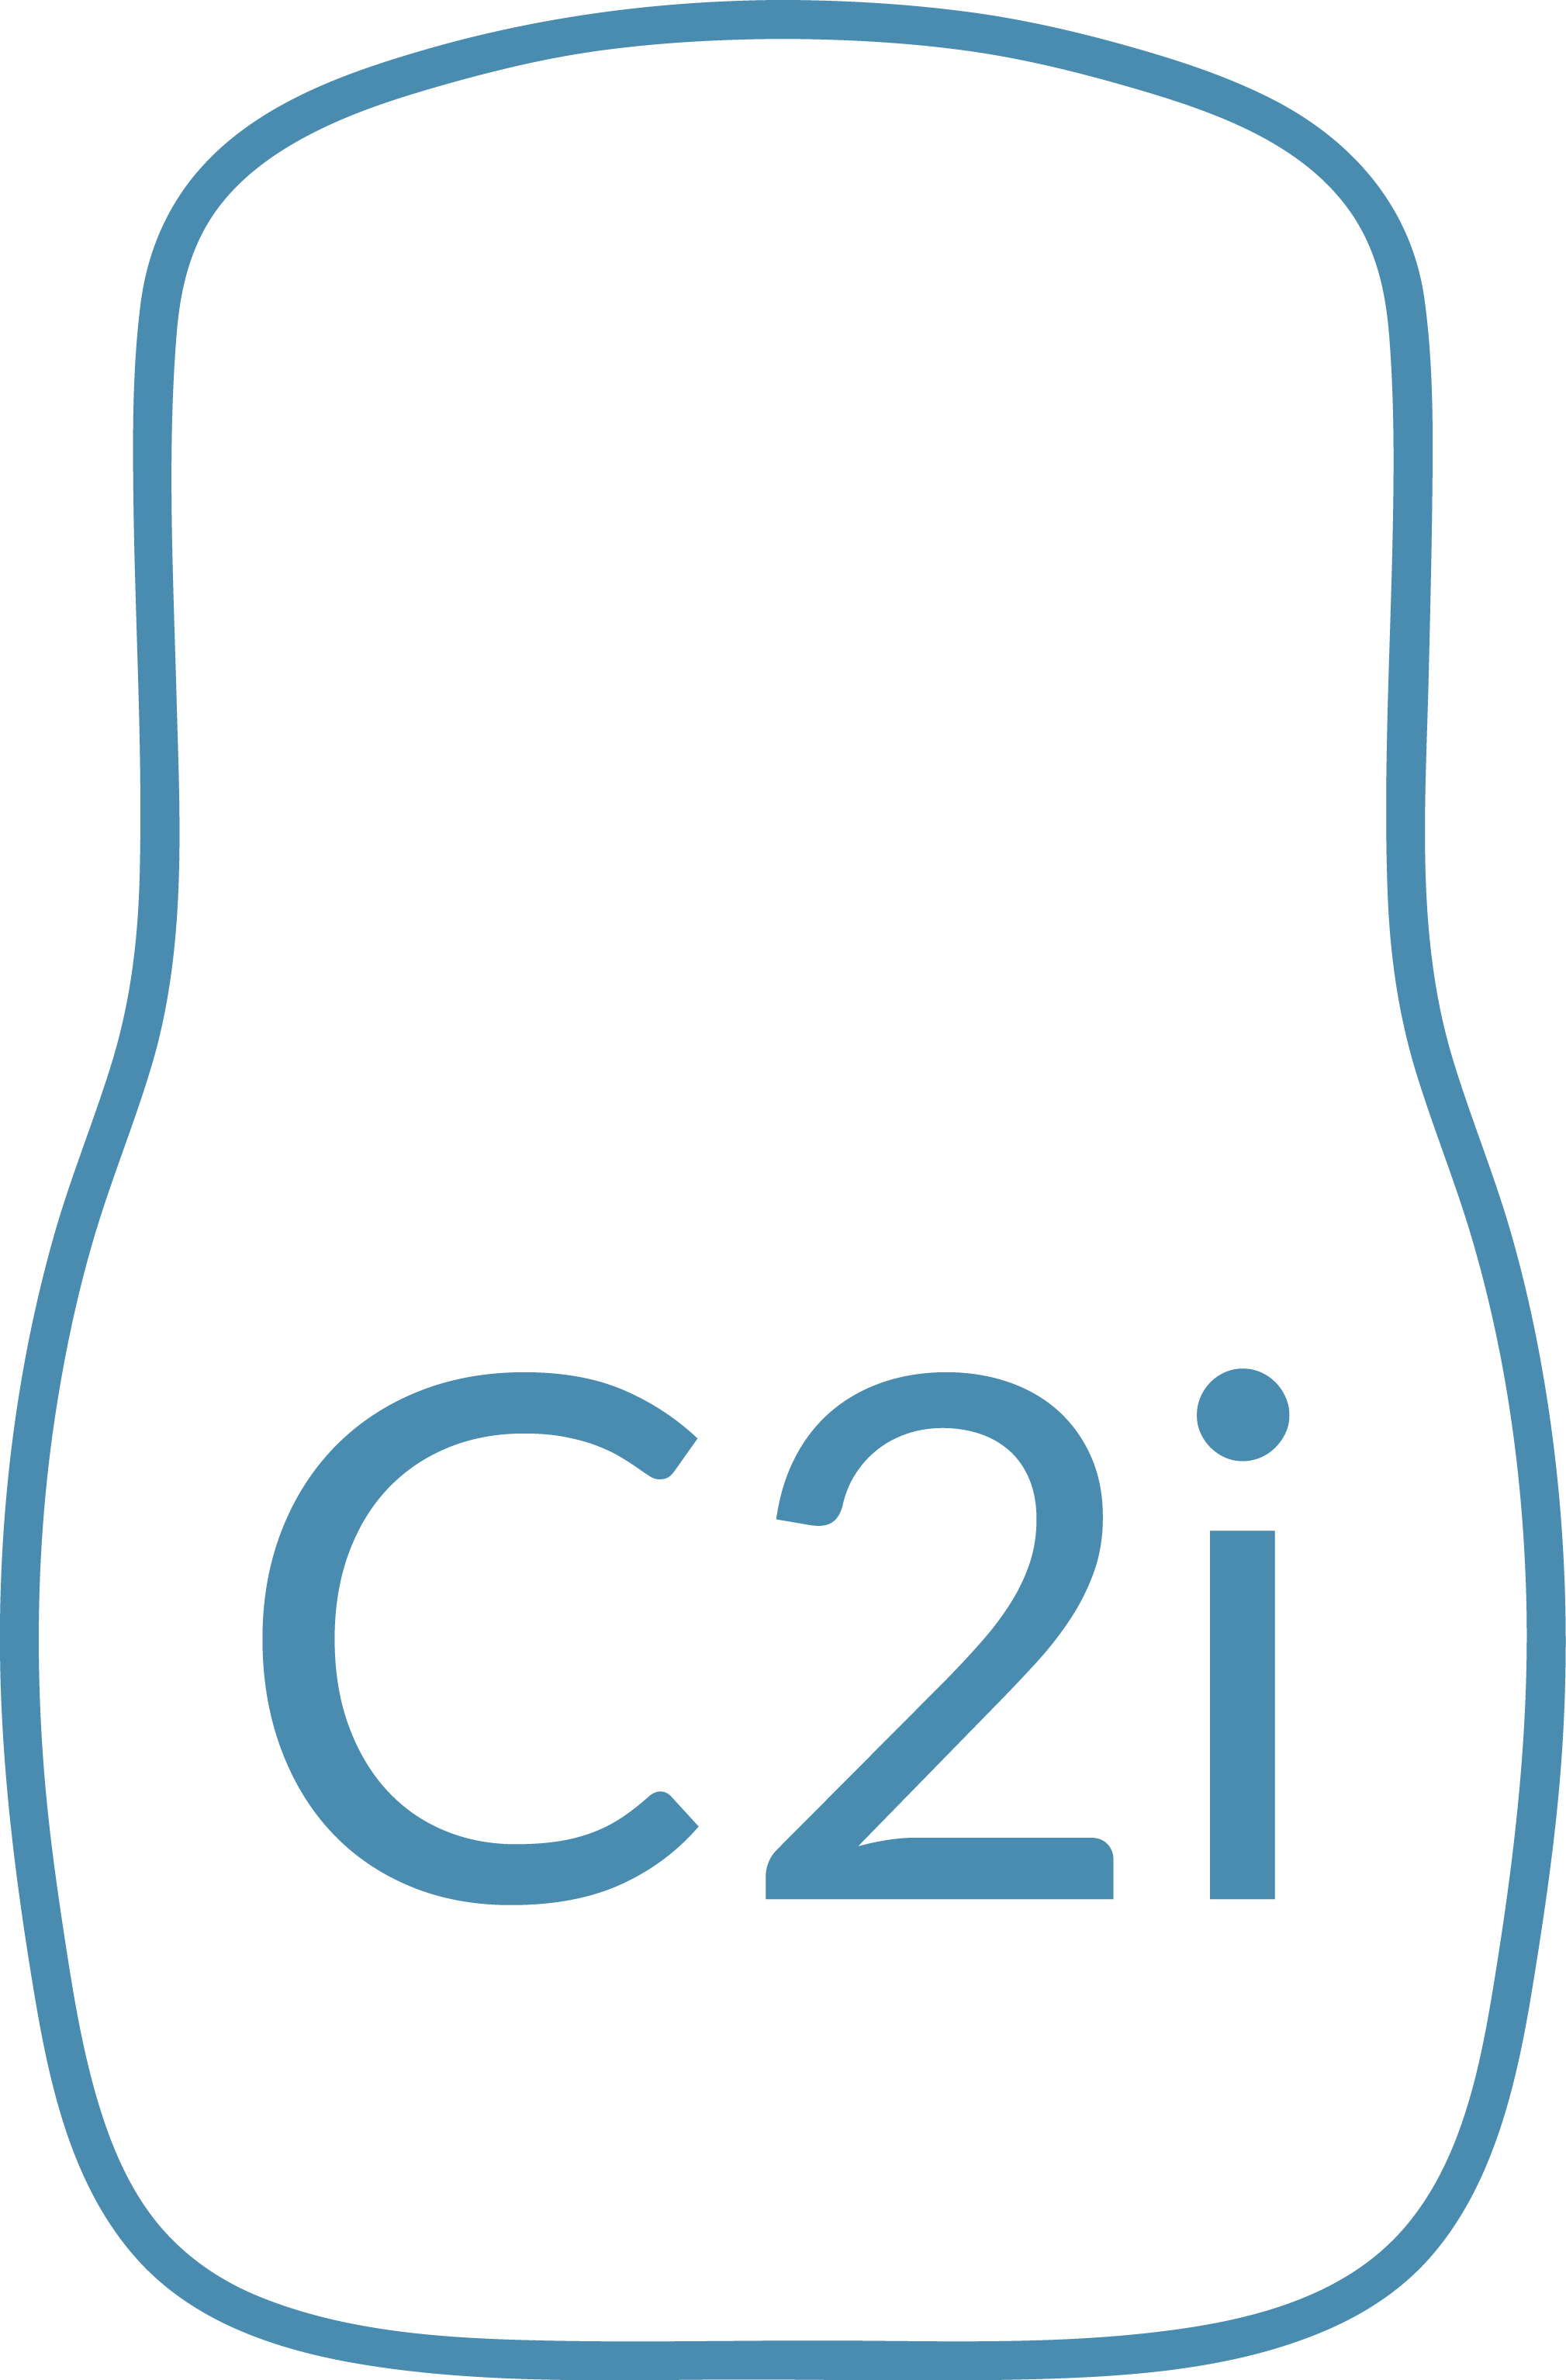 C2i Logo 2